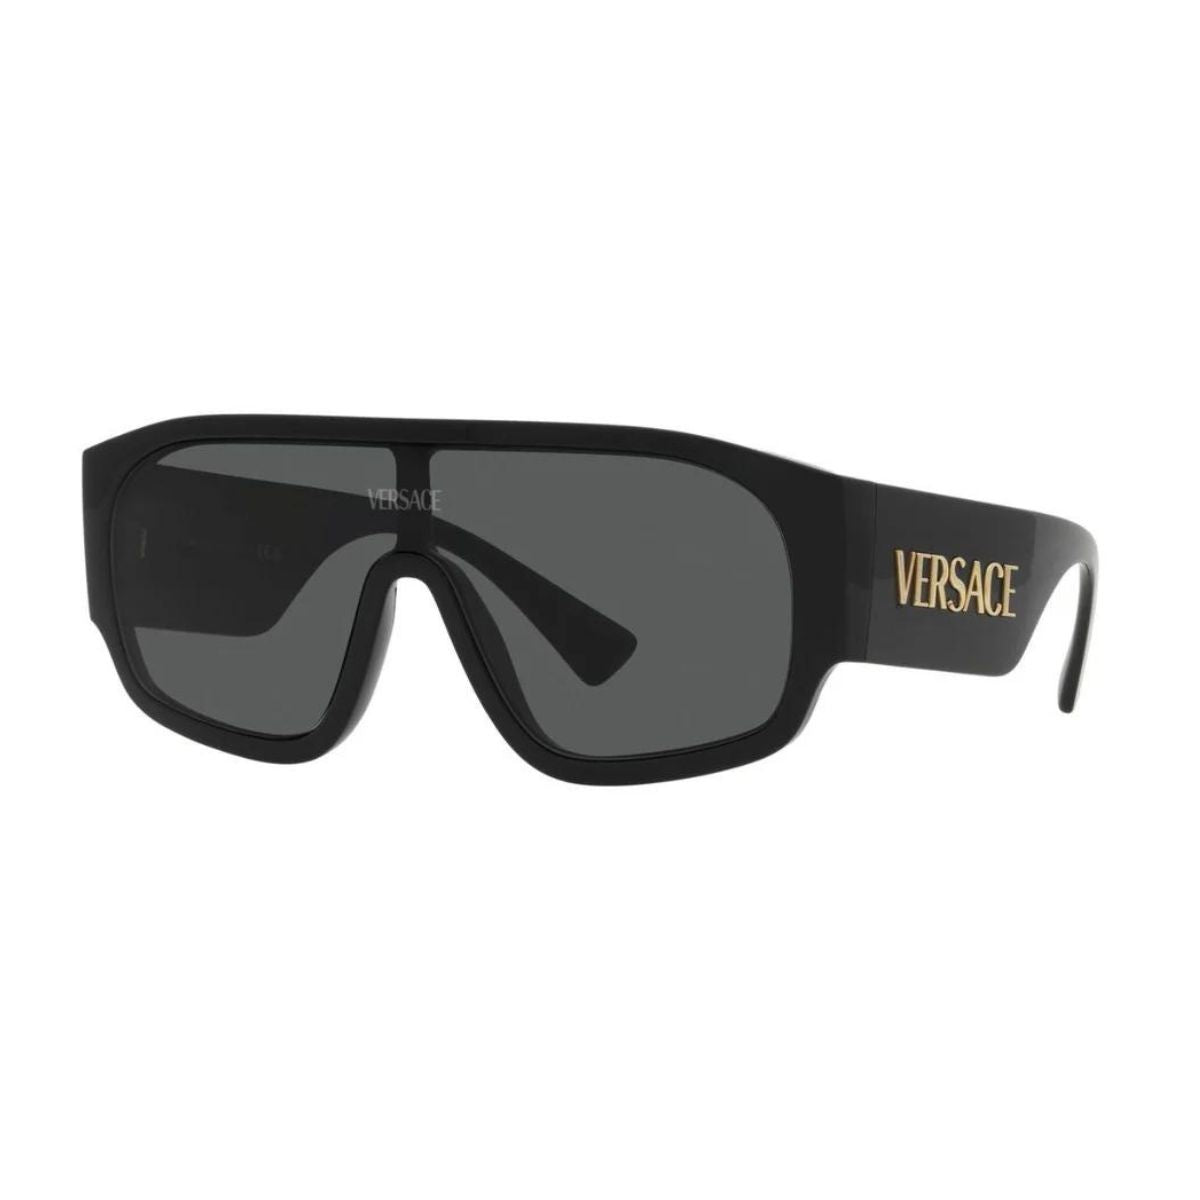 "Buy Versace 4439 GB1/87 Square Frame UV Sunglasses For Men And Women At Optorium"